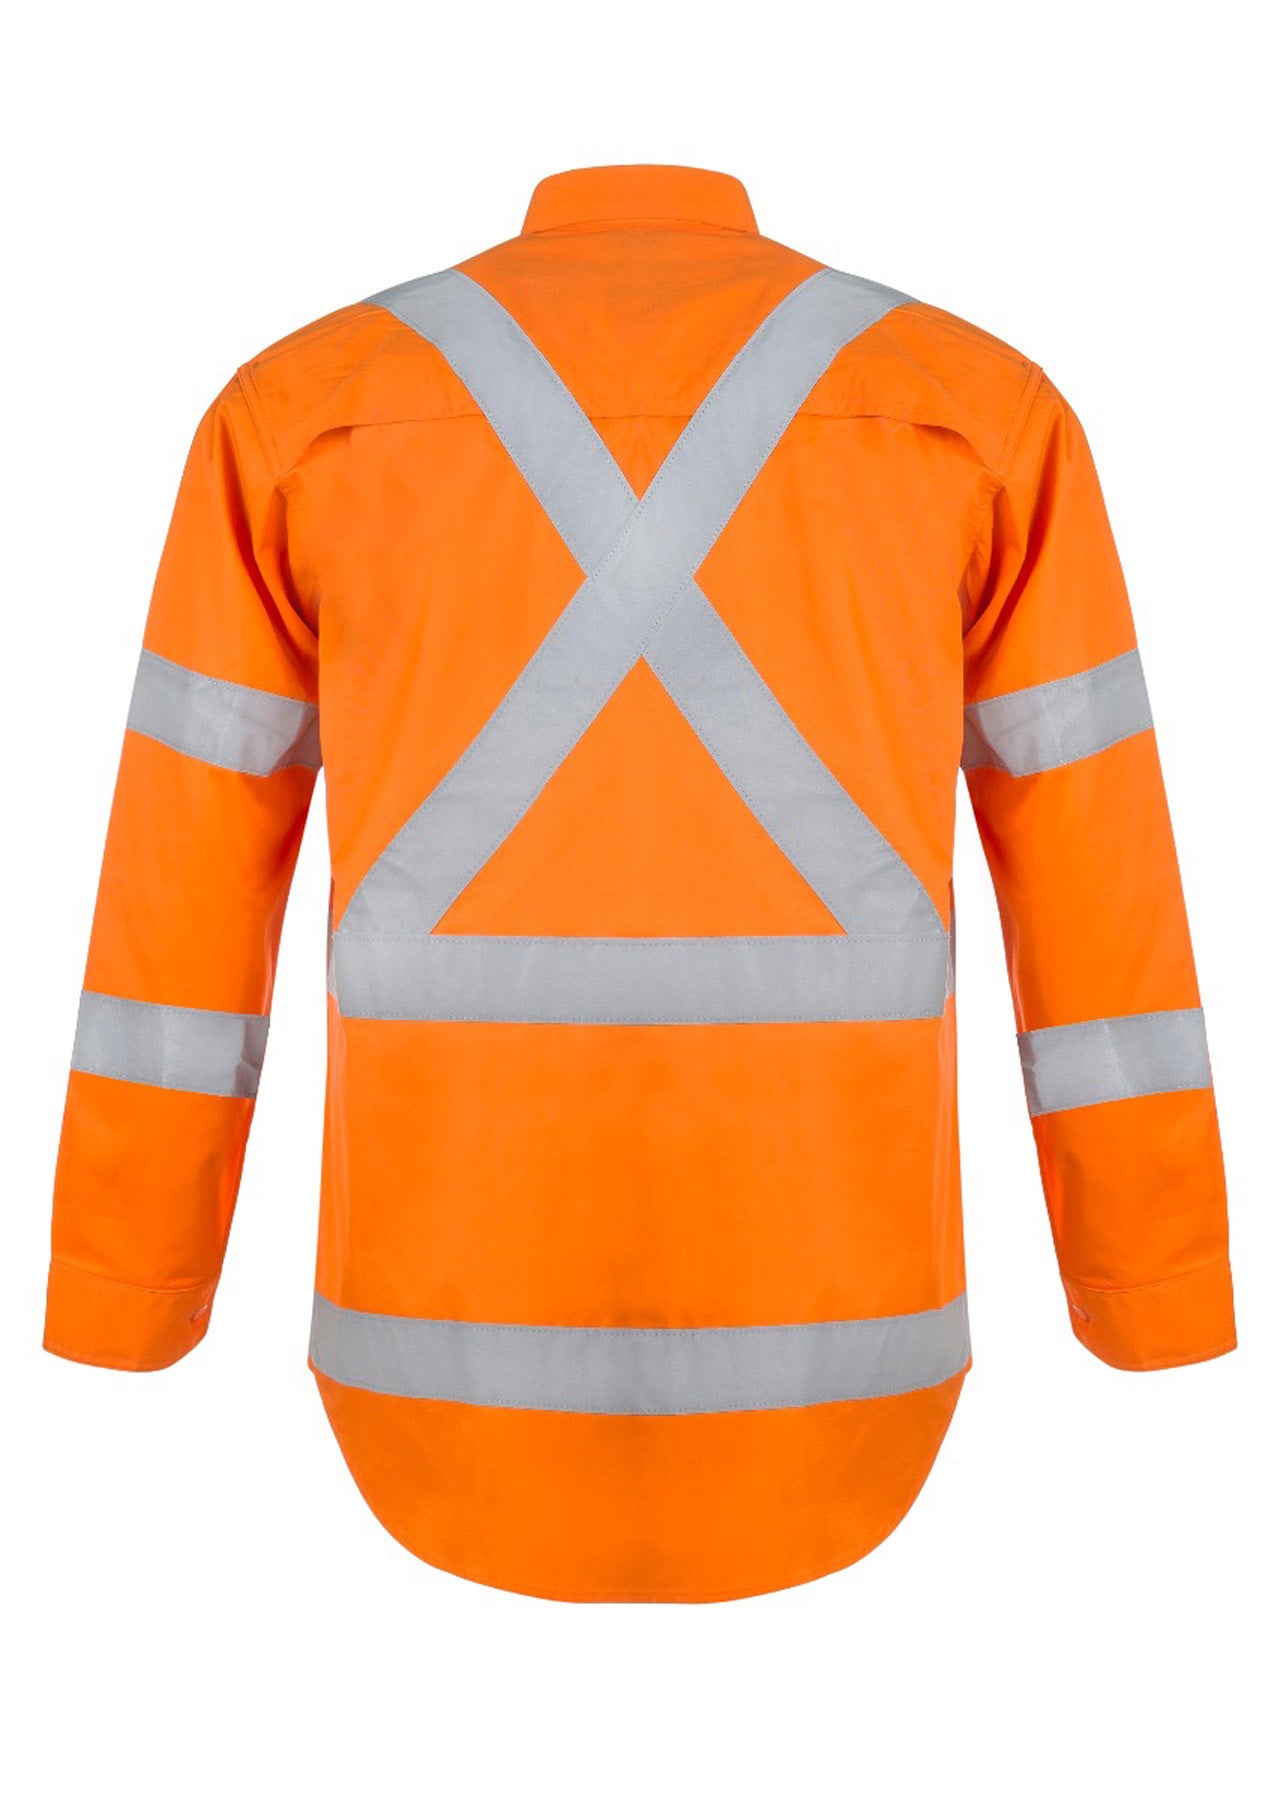 NSW Rail Long Sleeve Shirt - made by Workcraft